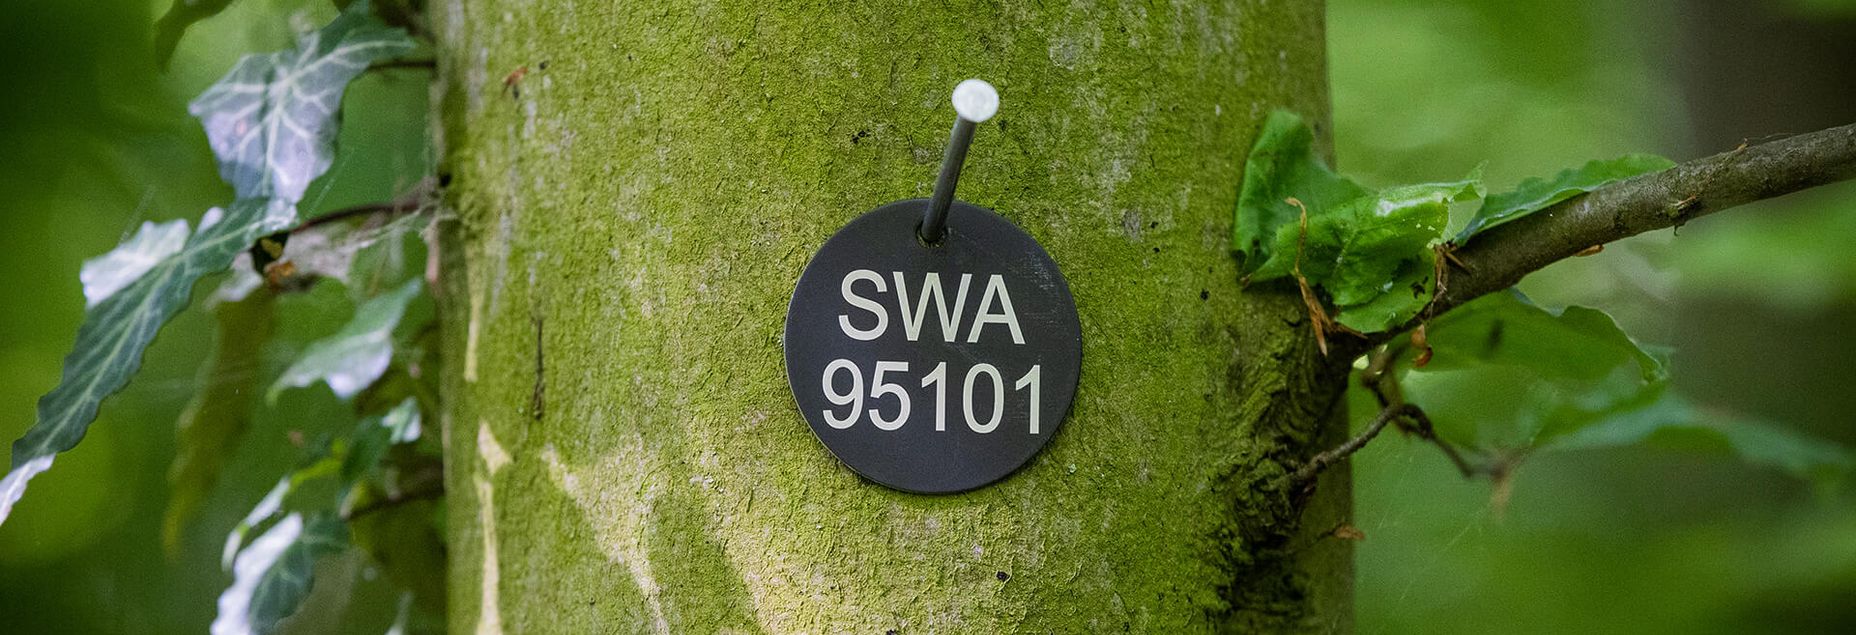 FriedWald-Onlineshop SWA 95101